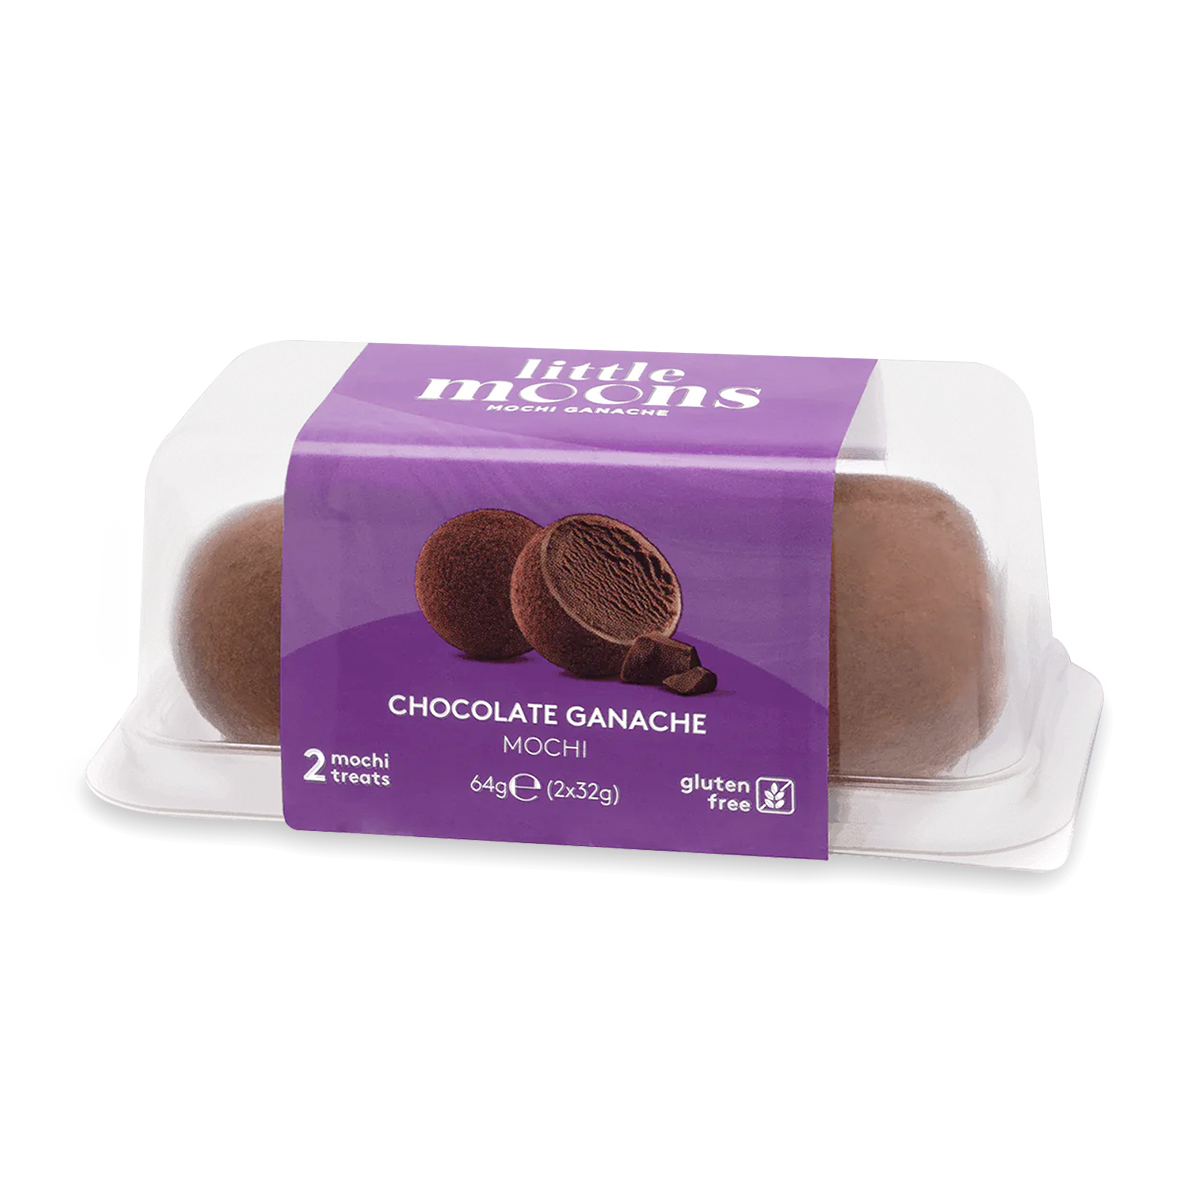 Exclusiv in magazine - Chocolate Ganache Mochi LITTLE MOONS 64g, asianfood.ro